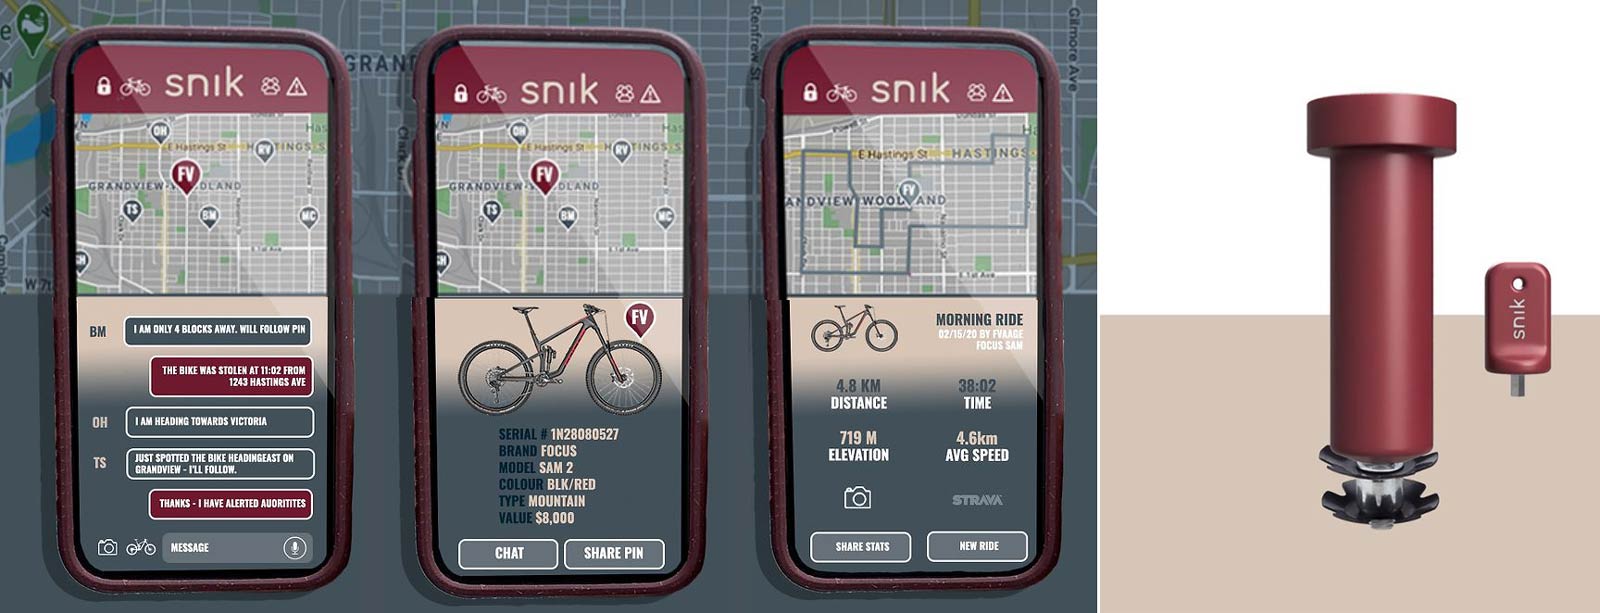 snik gps tracker bike security